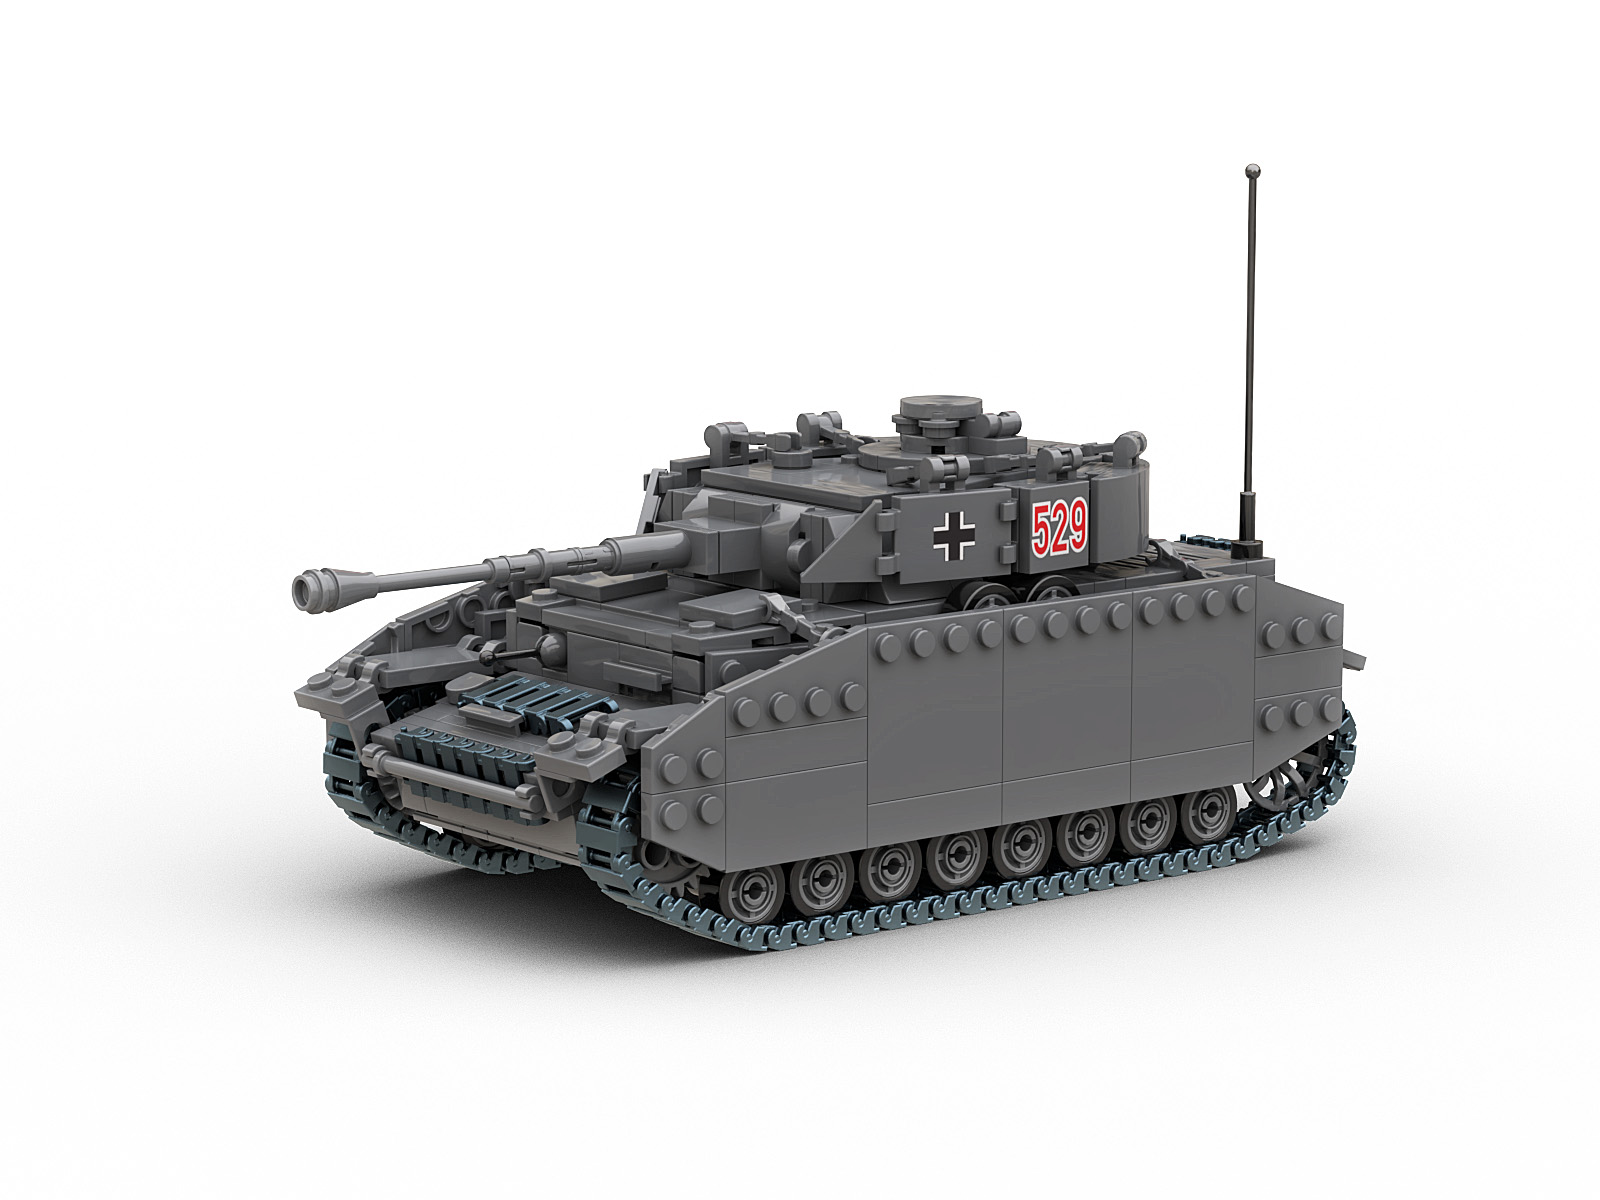 WW2 Panzer IV Ausf H Medium Tank Brick Set by Buildarmy® Minifigure scaled 